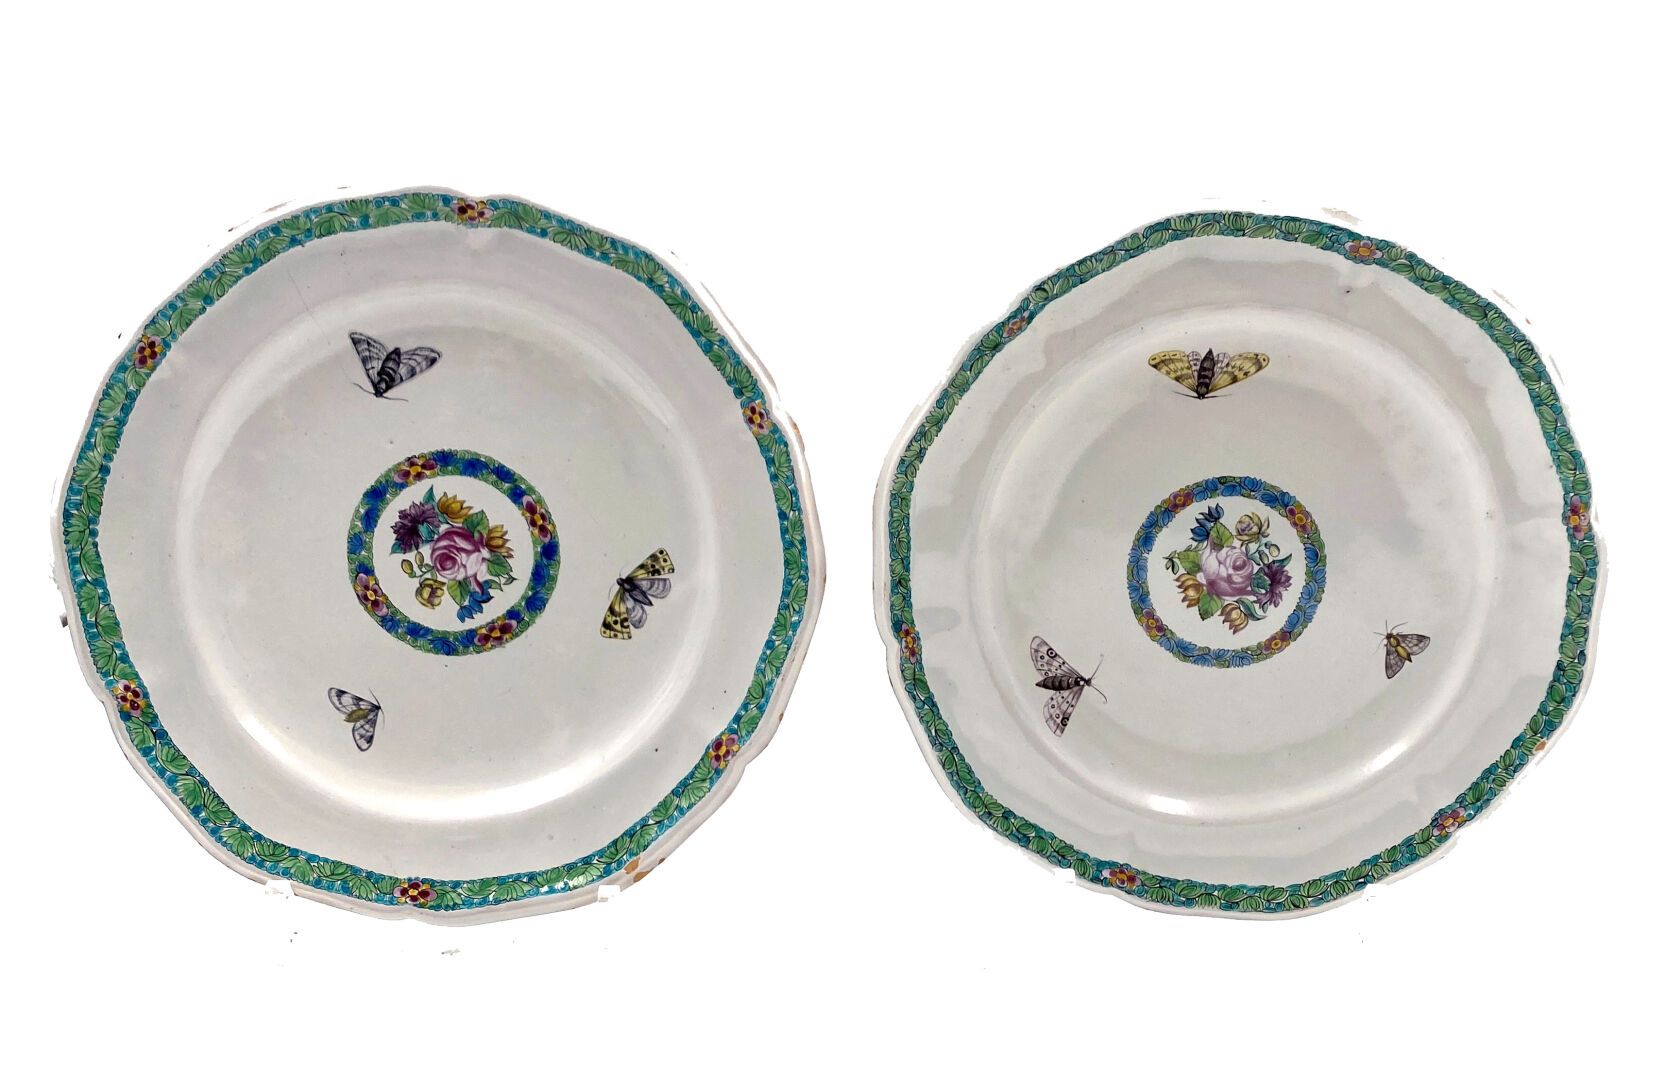 Null ħchst
两件陶器边盘，多色装饰，中间是一束花，周围是三只蝴蝶，边上是叶子和花。
标有：黑色的车轮和Zisler。
18世纪。 
D. 23厘米。
&hellip;